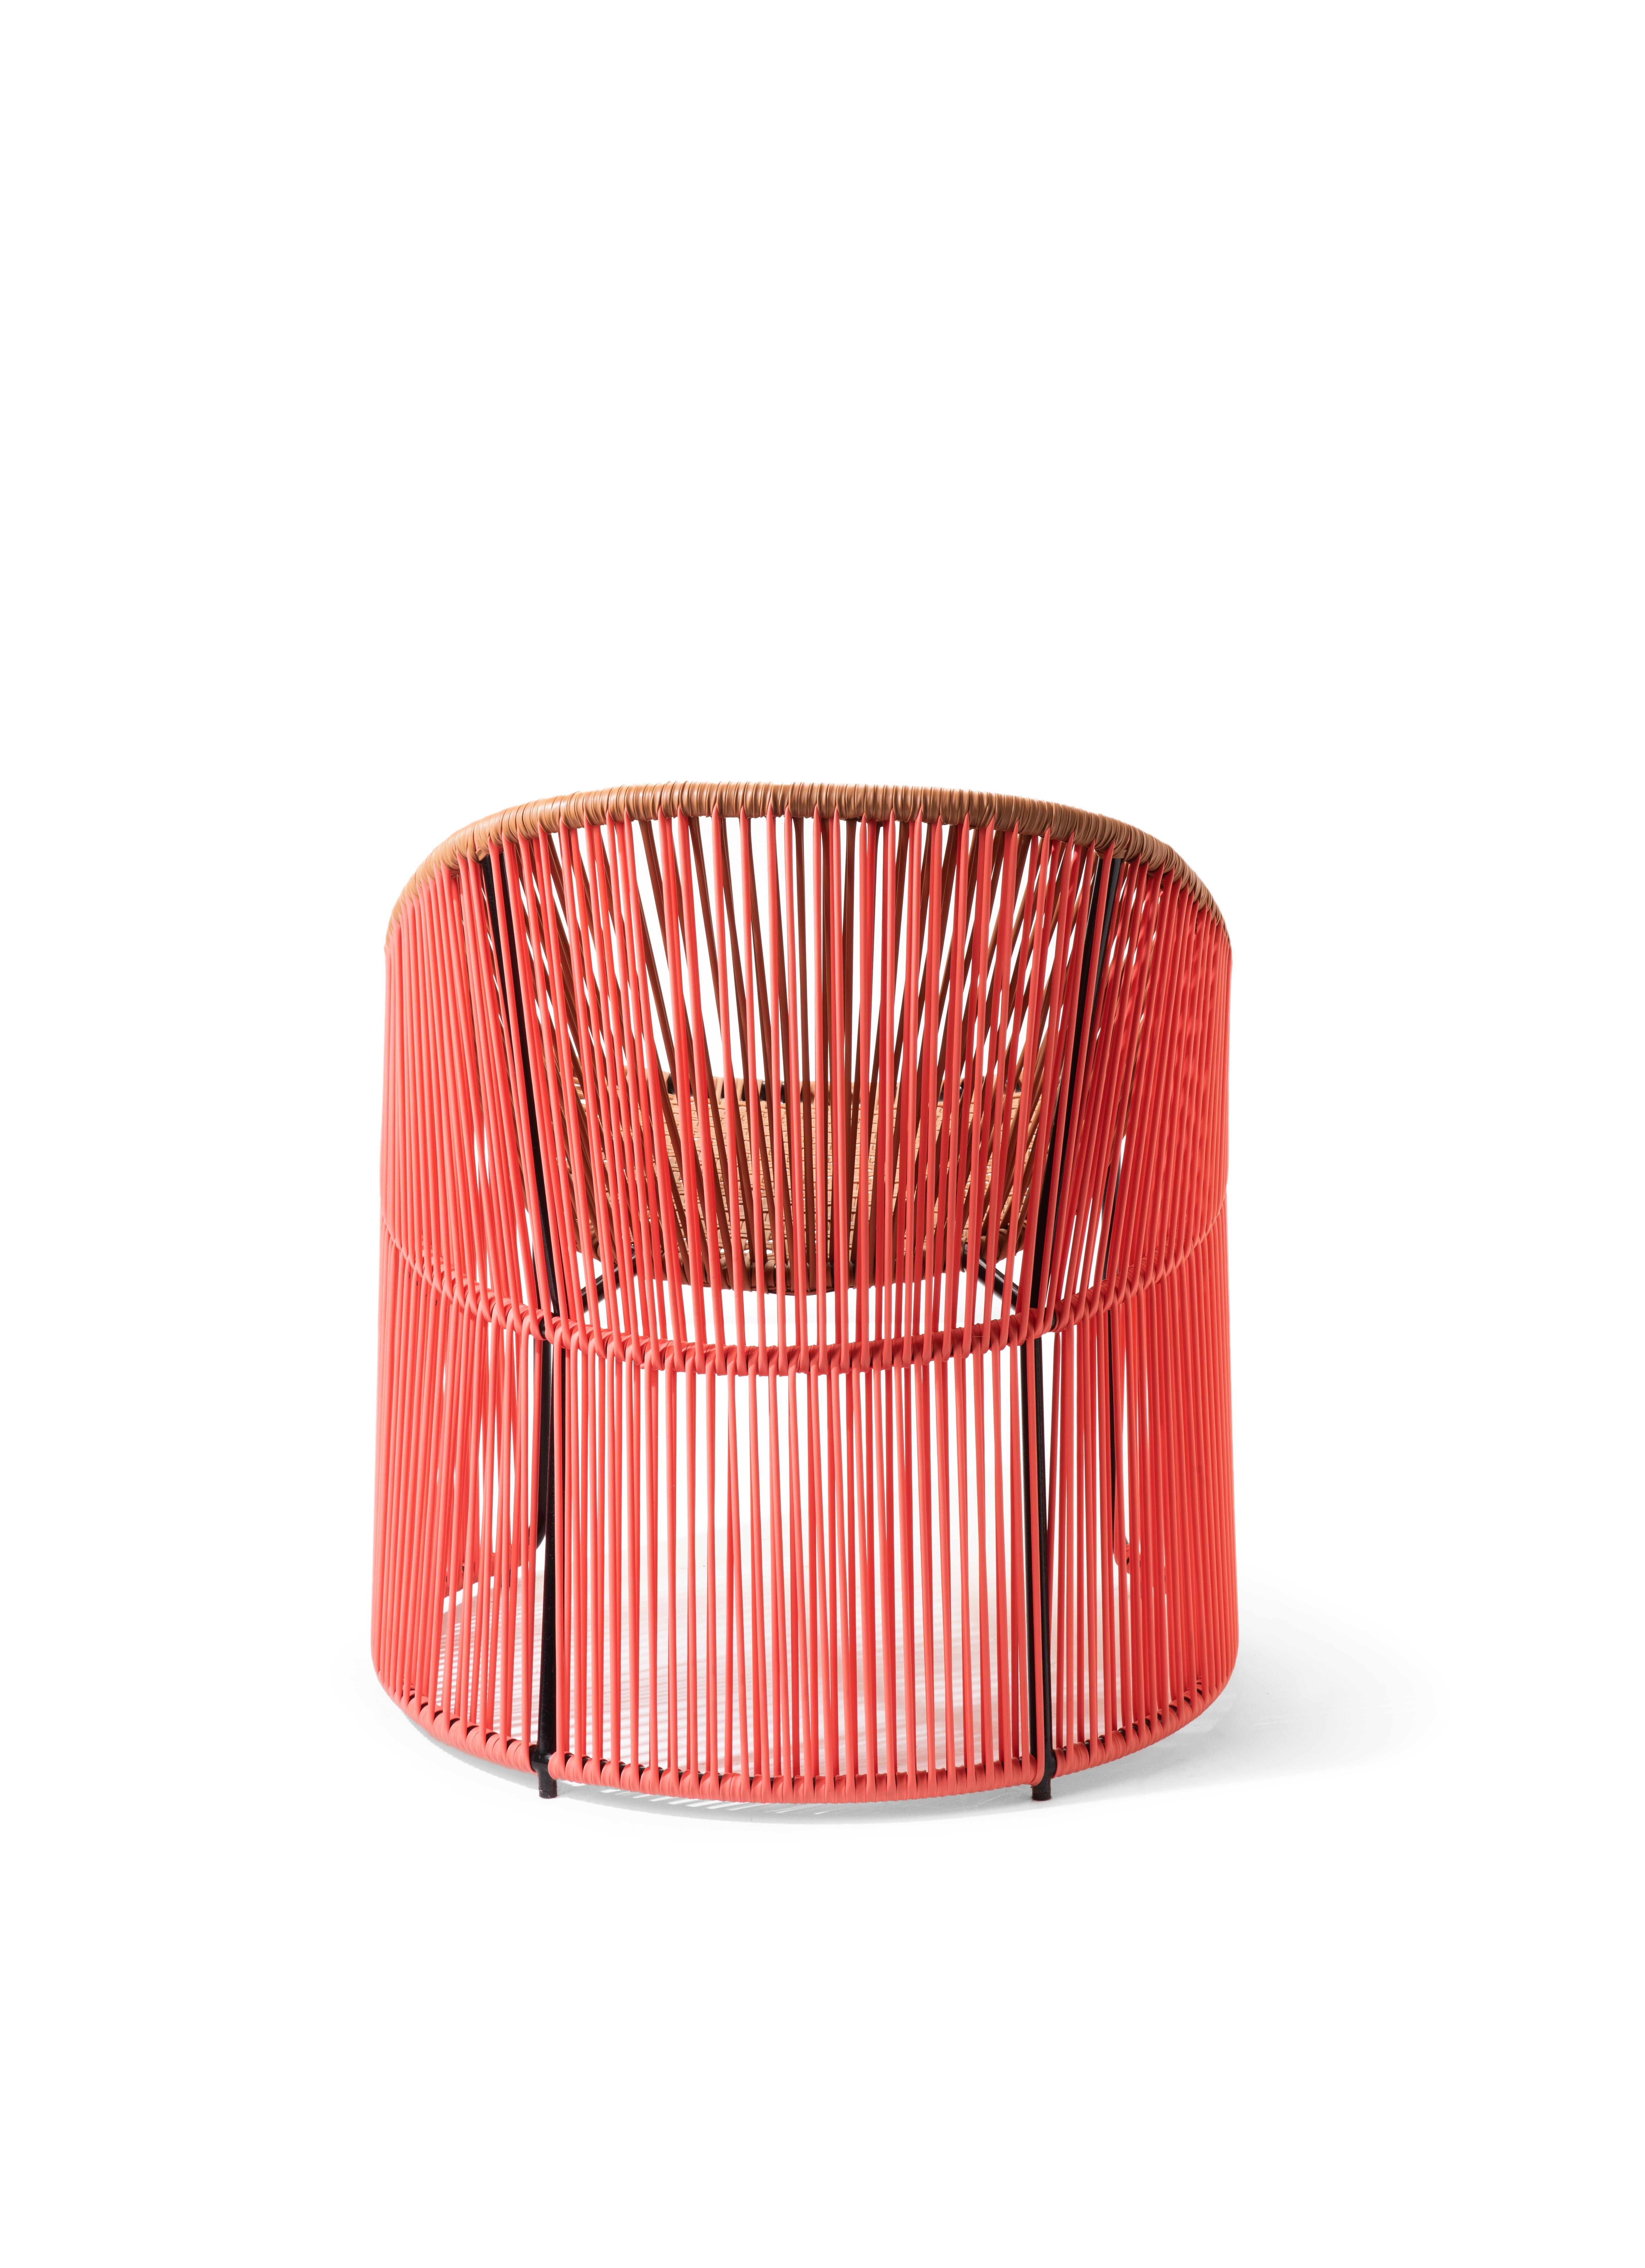 Powder-Coated Coral Cartagenas Lounge Chair by Sebastian Herkner